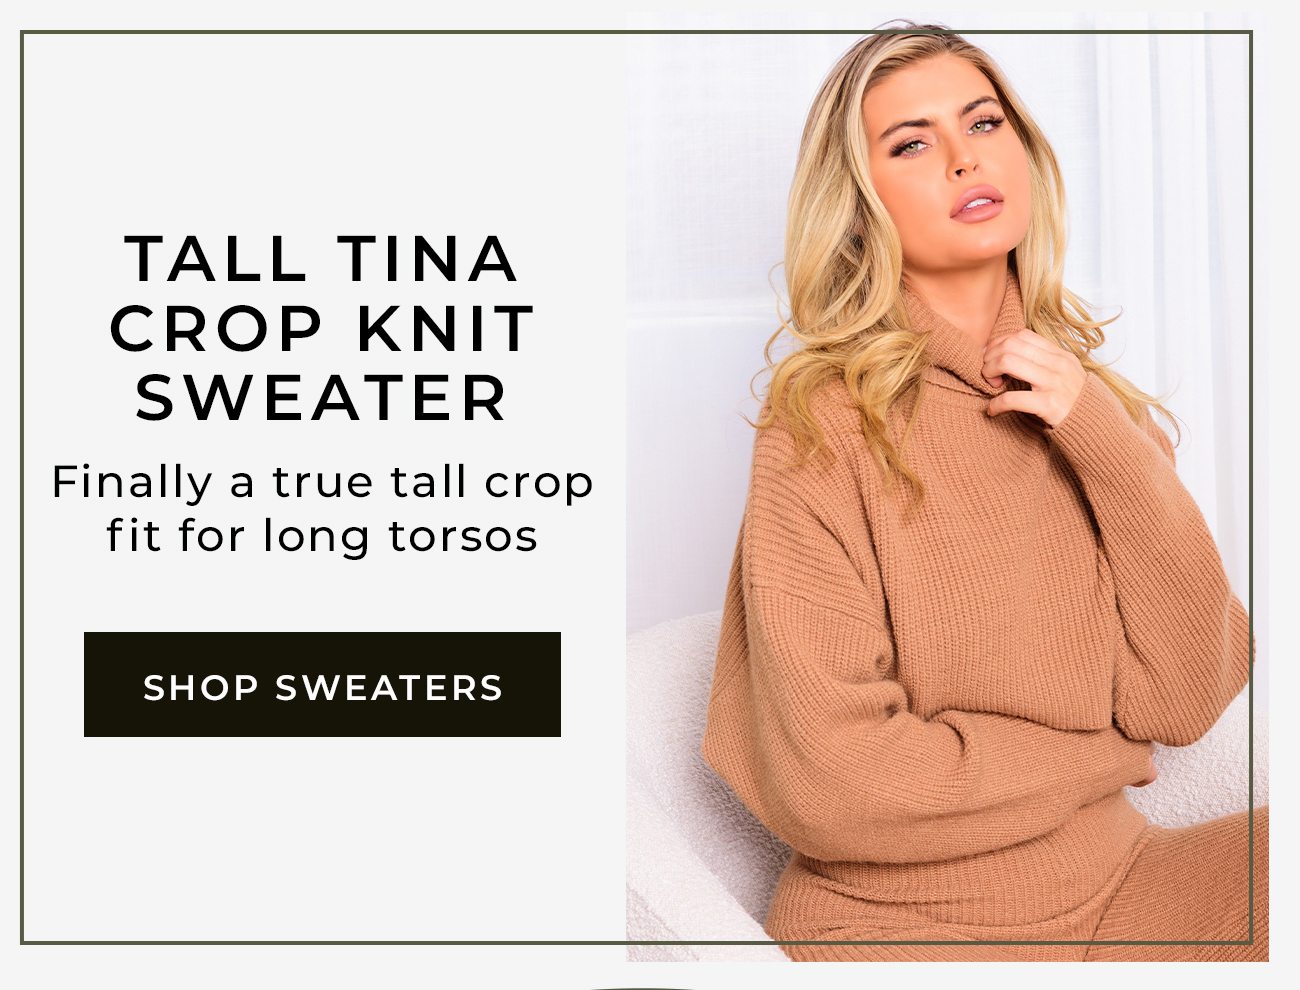 Tall Tina Crop Knit Sweater - Finally a true tall crop fit for long torsos